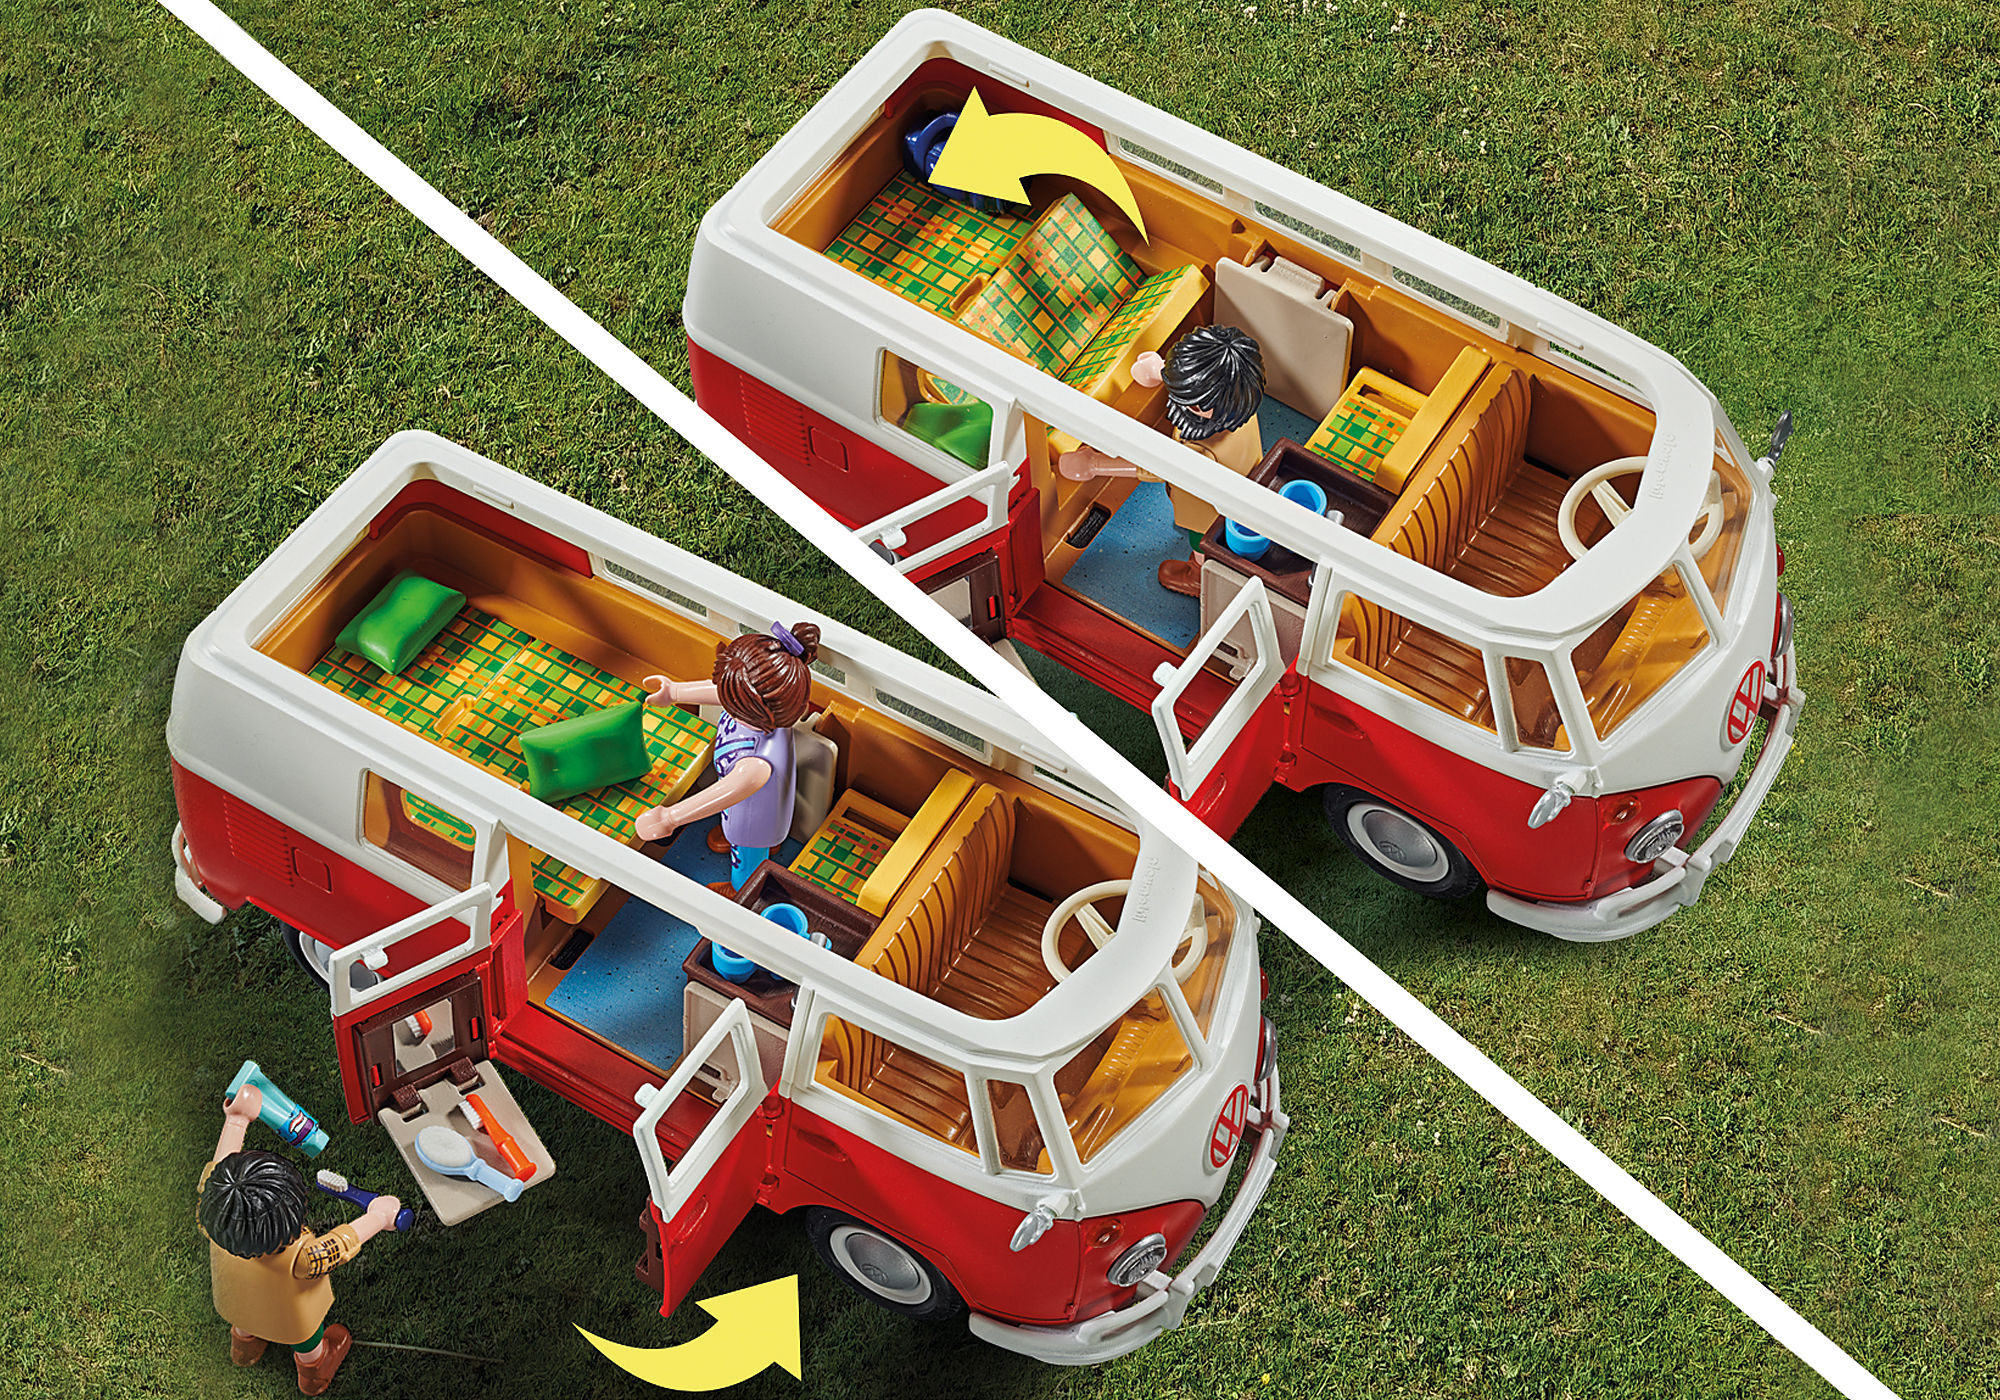 Playmobil 70176 : Volkswagen T1 Combi - Jeux et jouets Playmobil